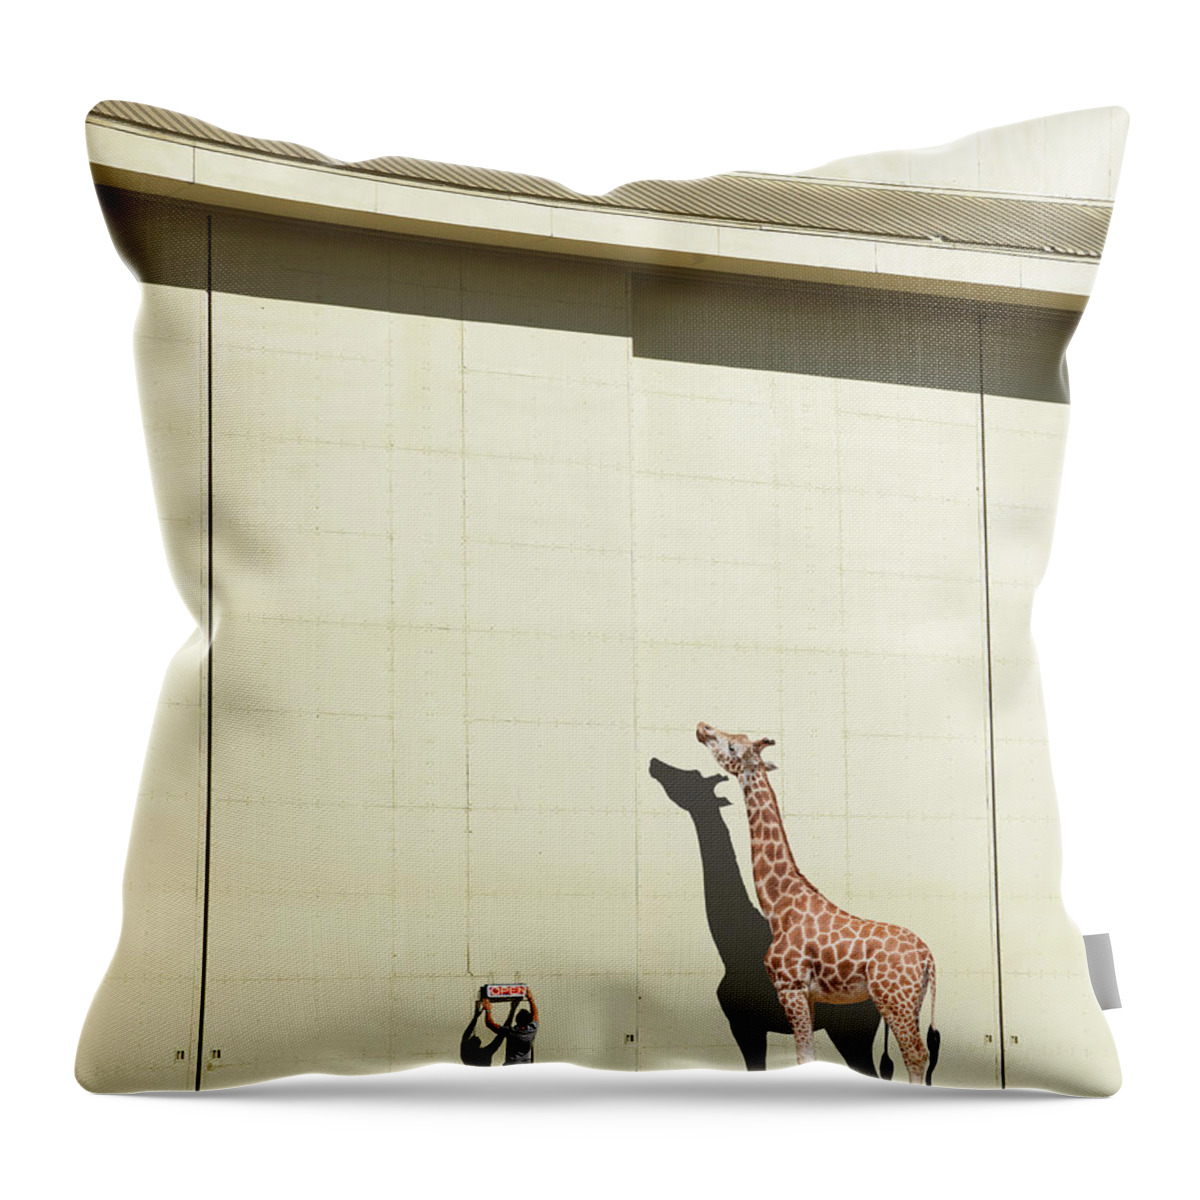 Shadow Throw Pillow featuring the photograph Curious Giraffe by Richard Newstead